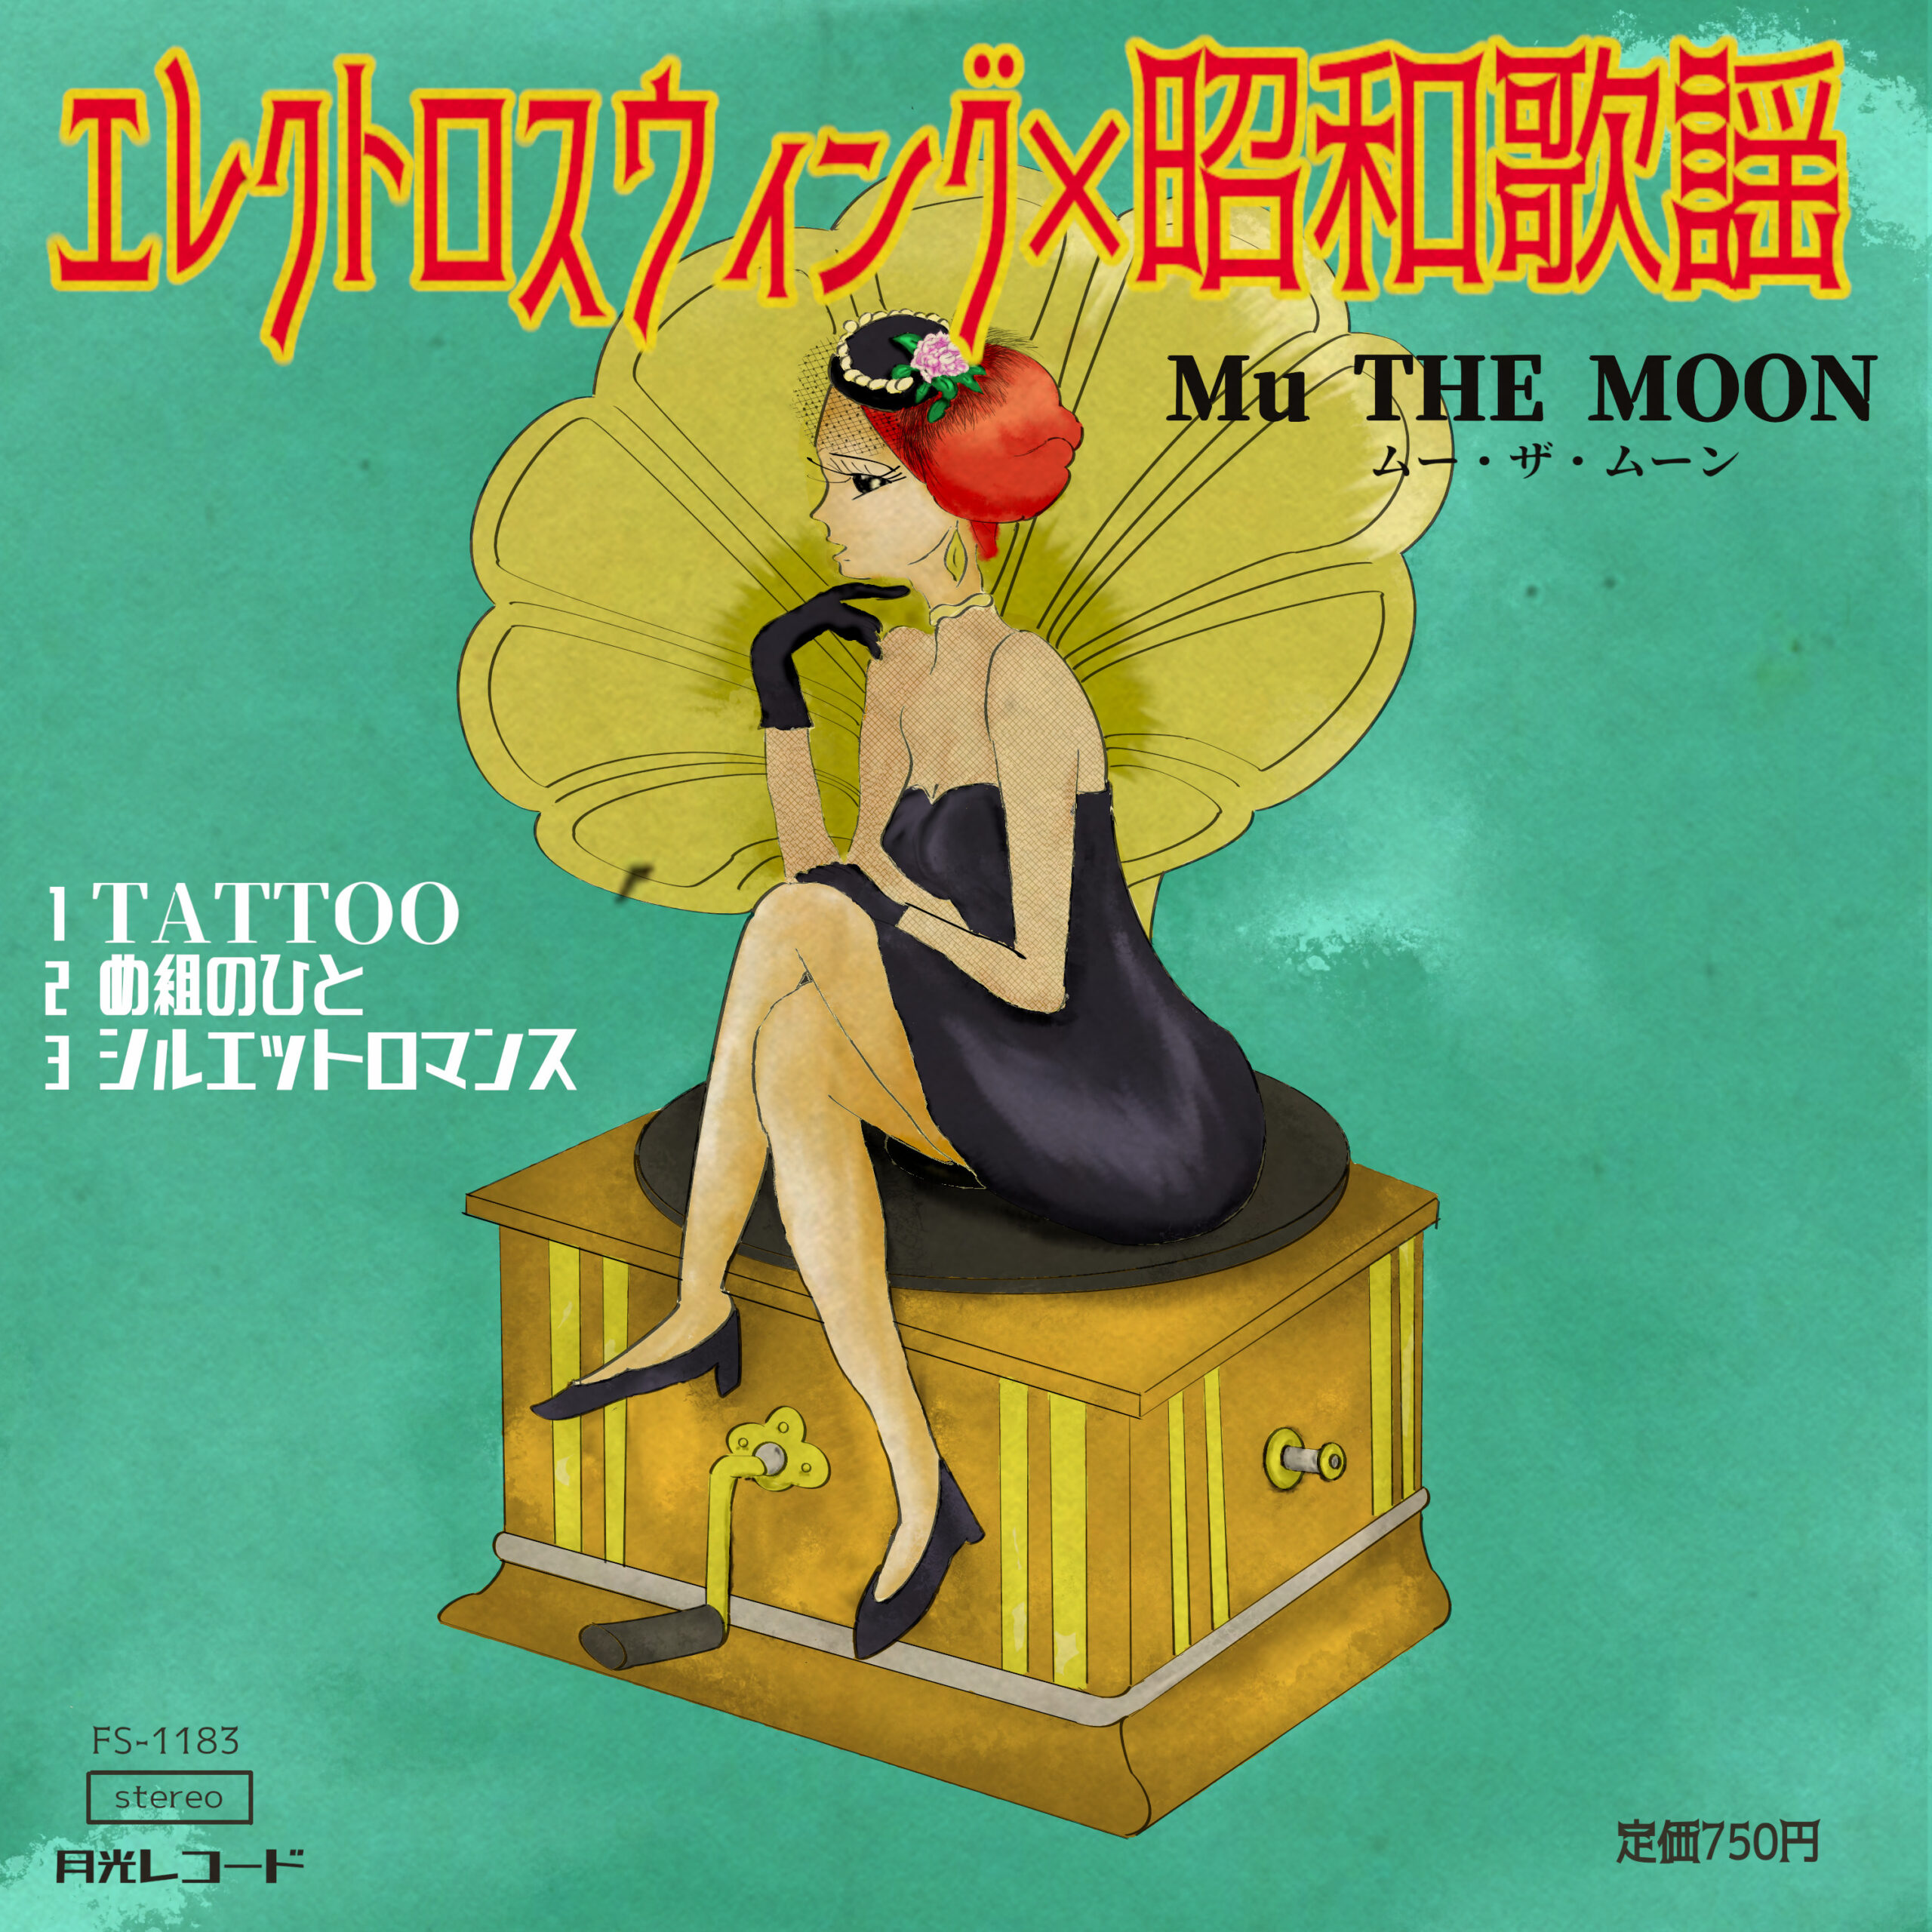 Mu THE MOON第一弾EP「エレクトロスウィング×昭和歌謡」2022 